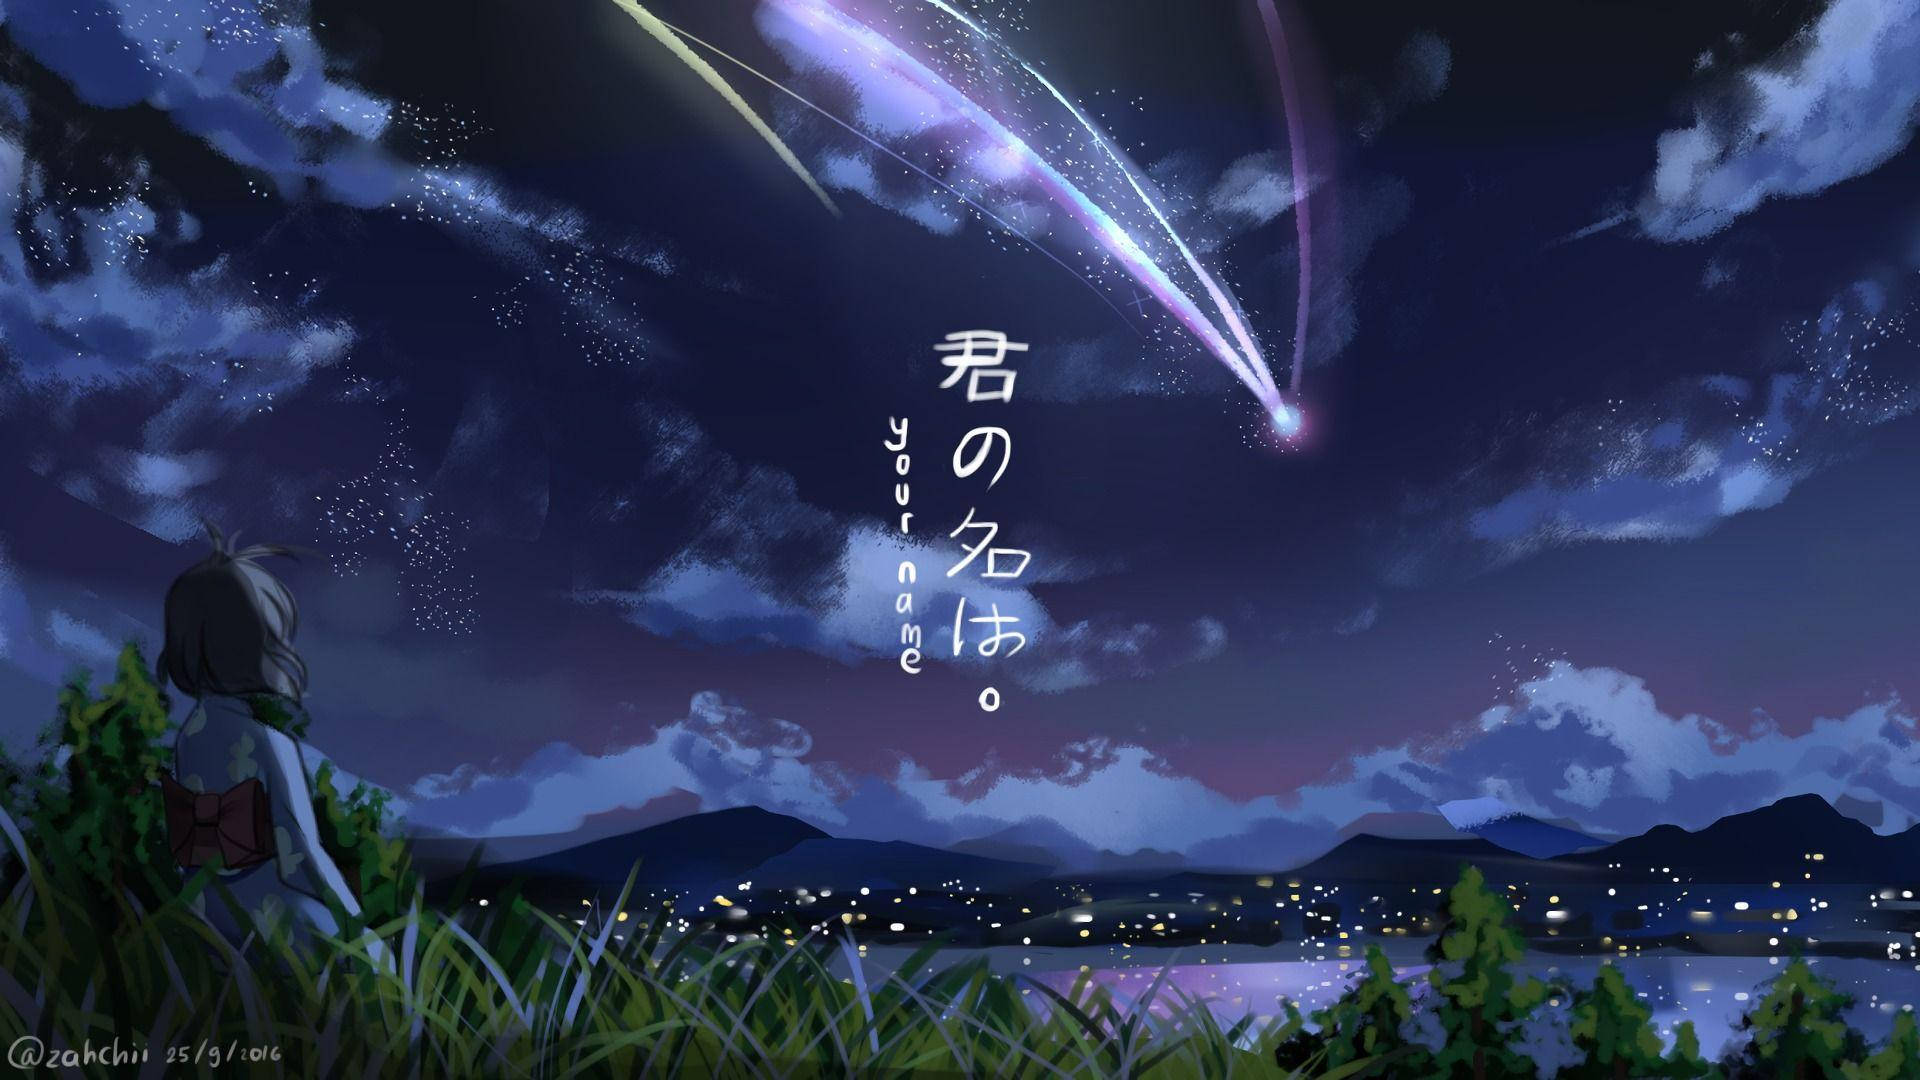 Your Name Anime Film Features Mitsuha